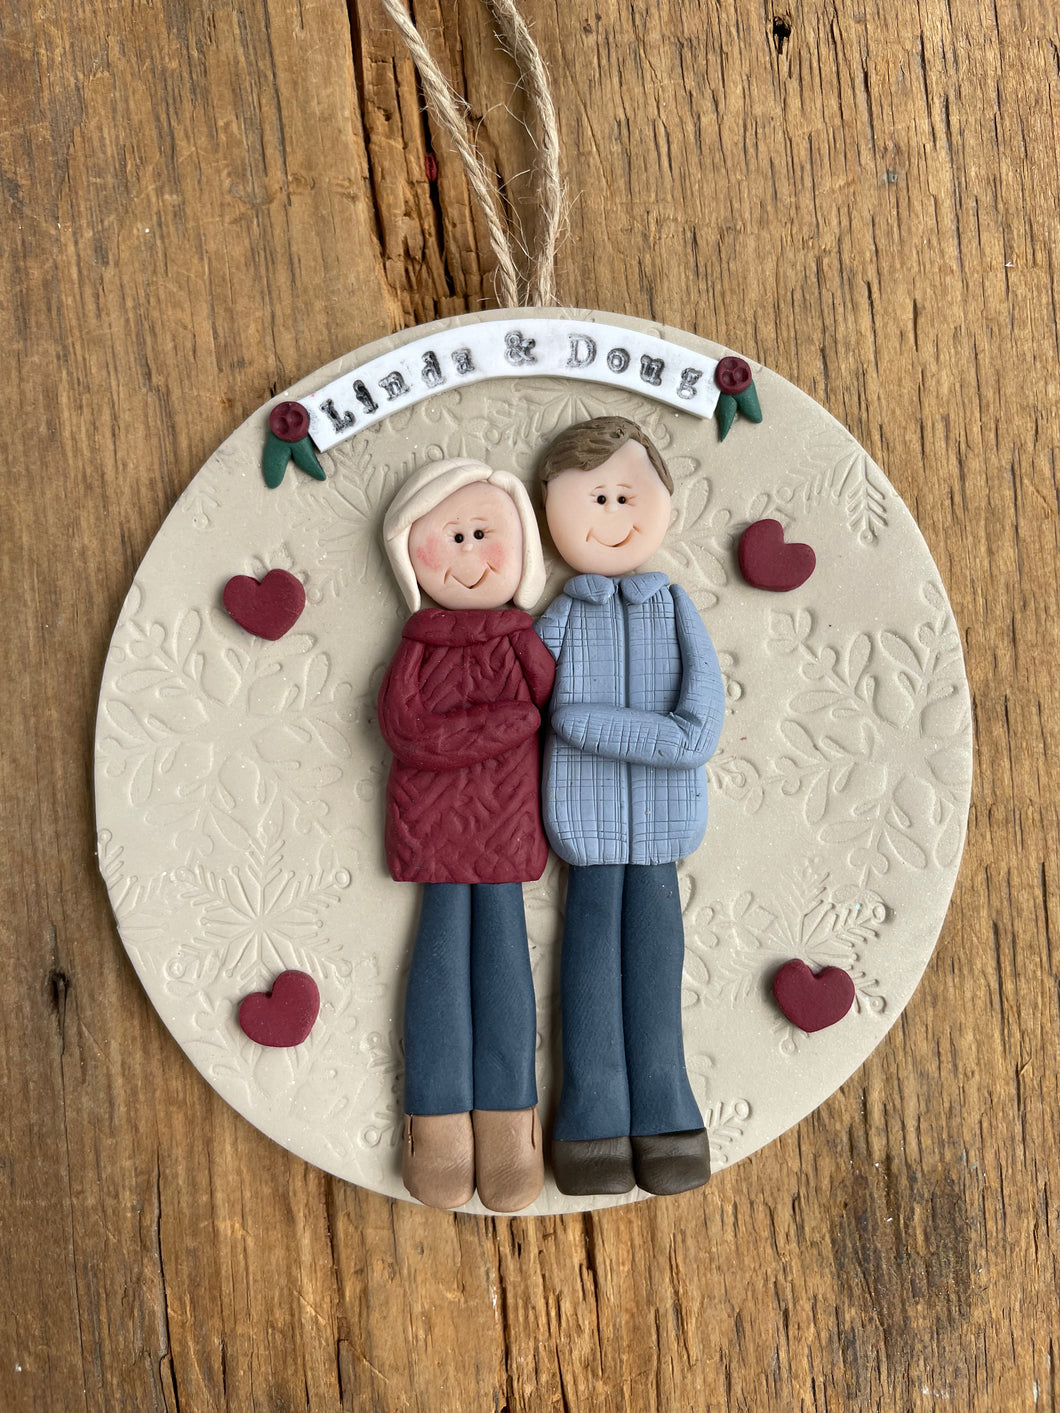 2 Member custom clay family portrait Christmas ornament